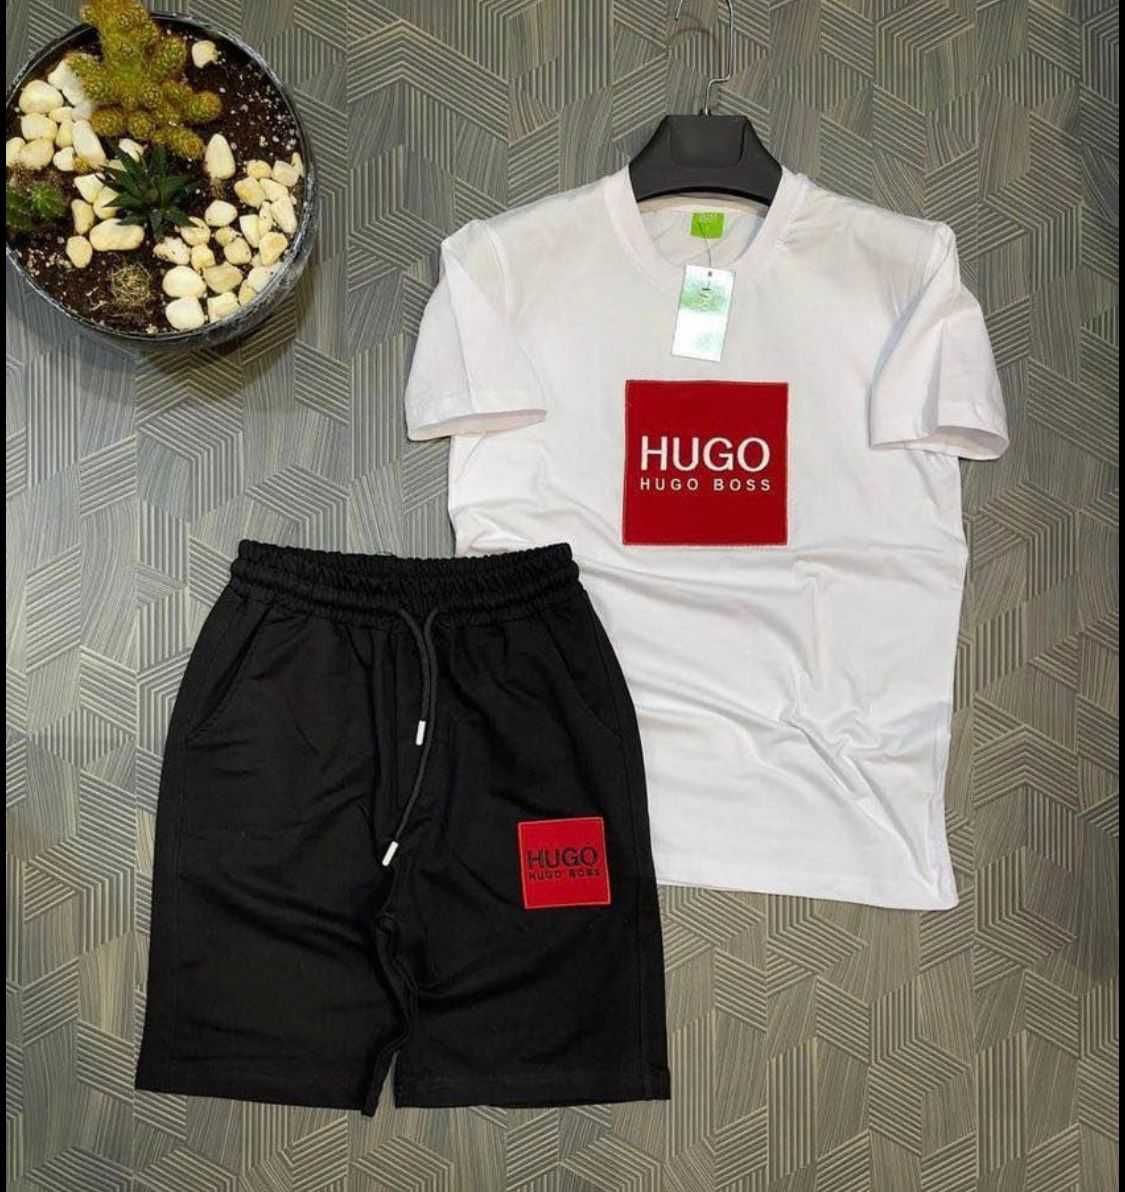 Compleu / Compleuri Hugo Boss